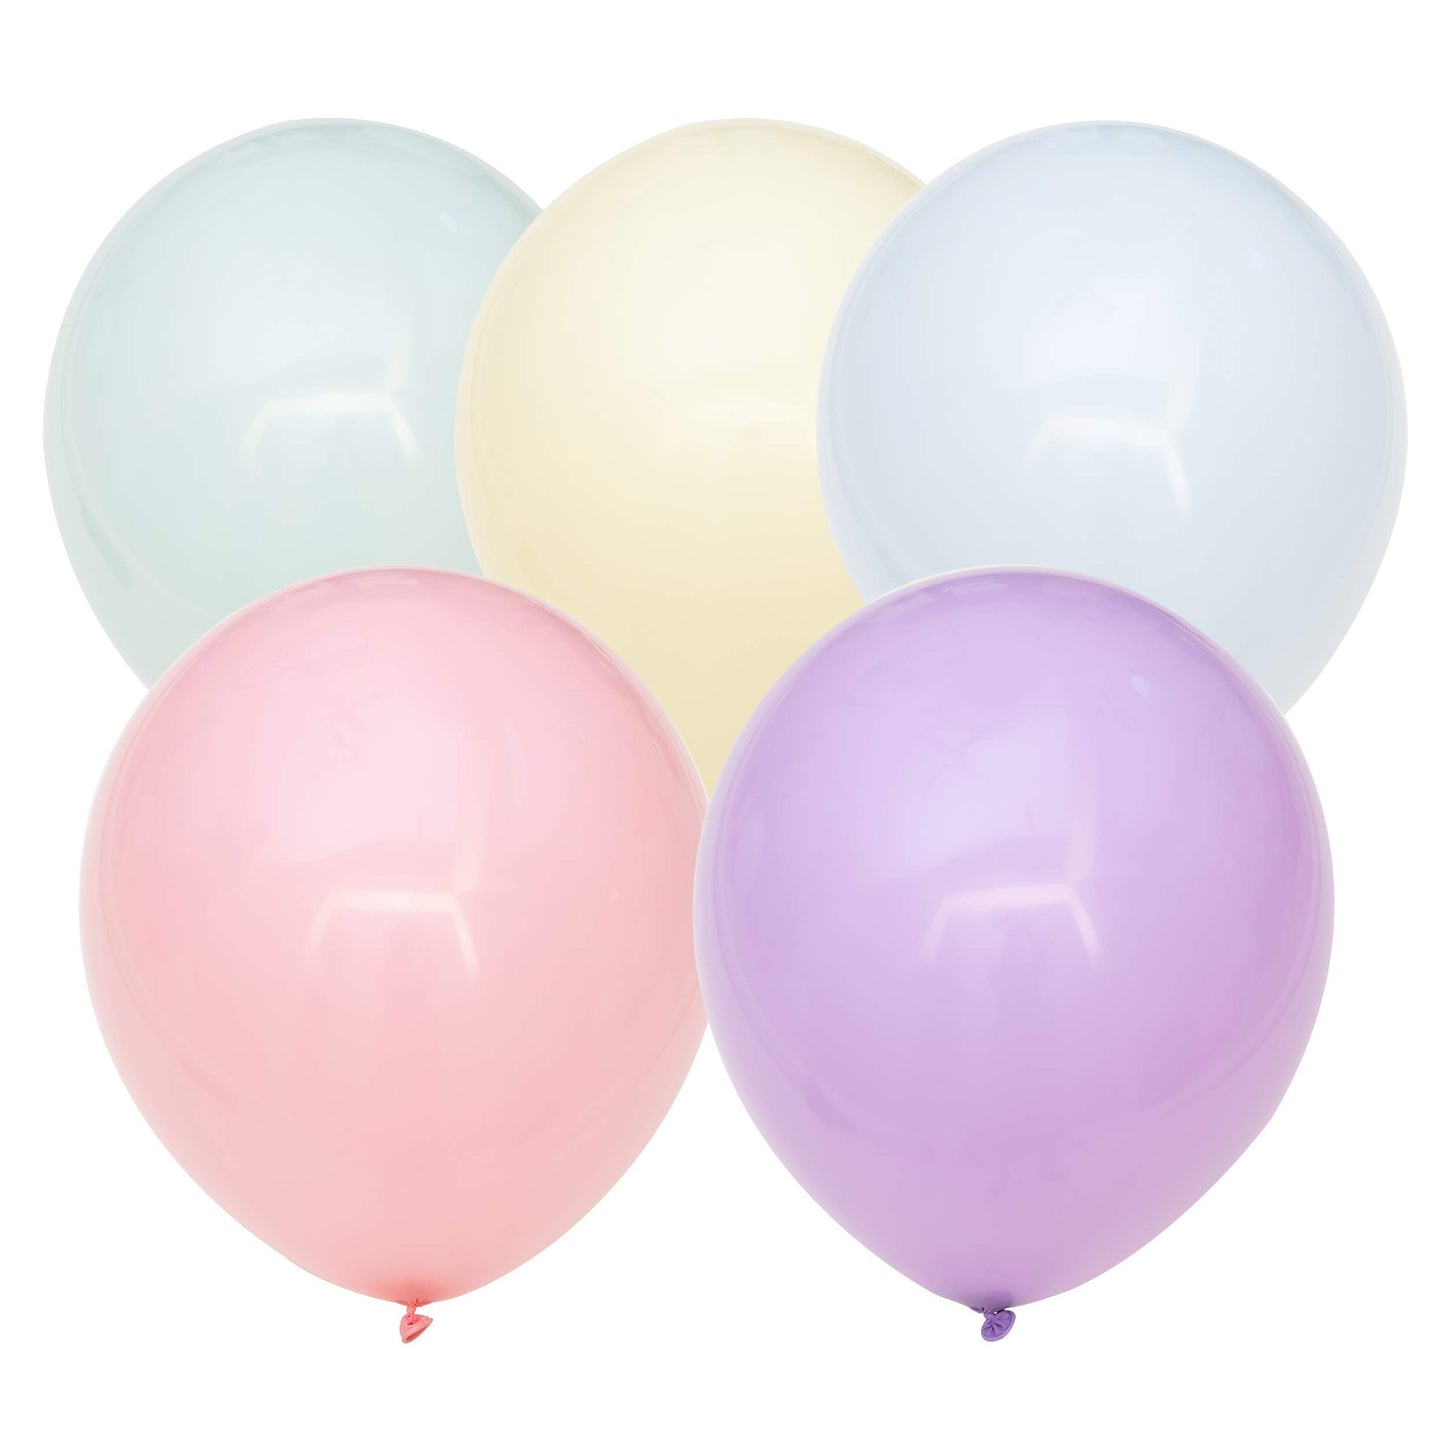 Assorted Pastel Macaron Balloons (6)